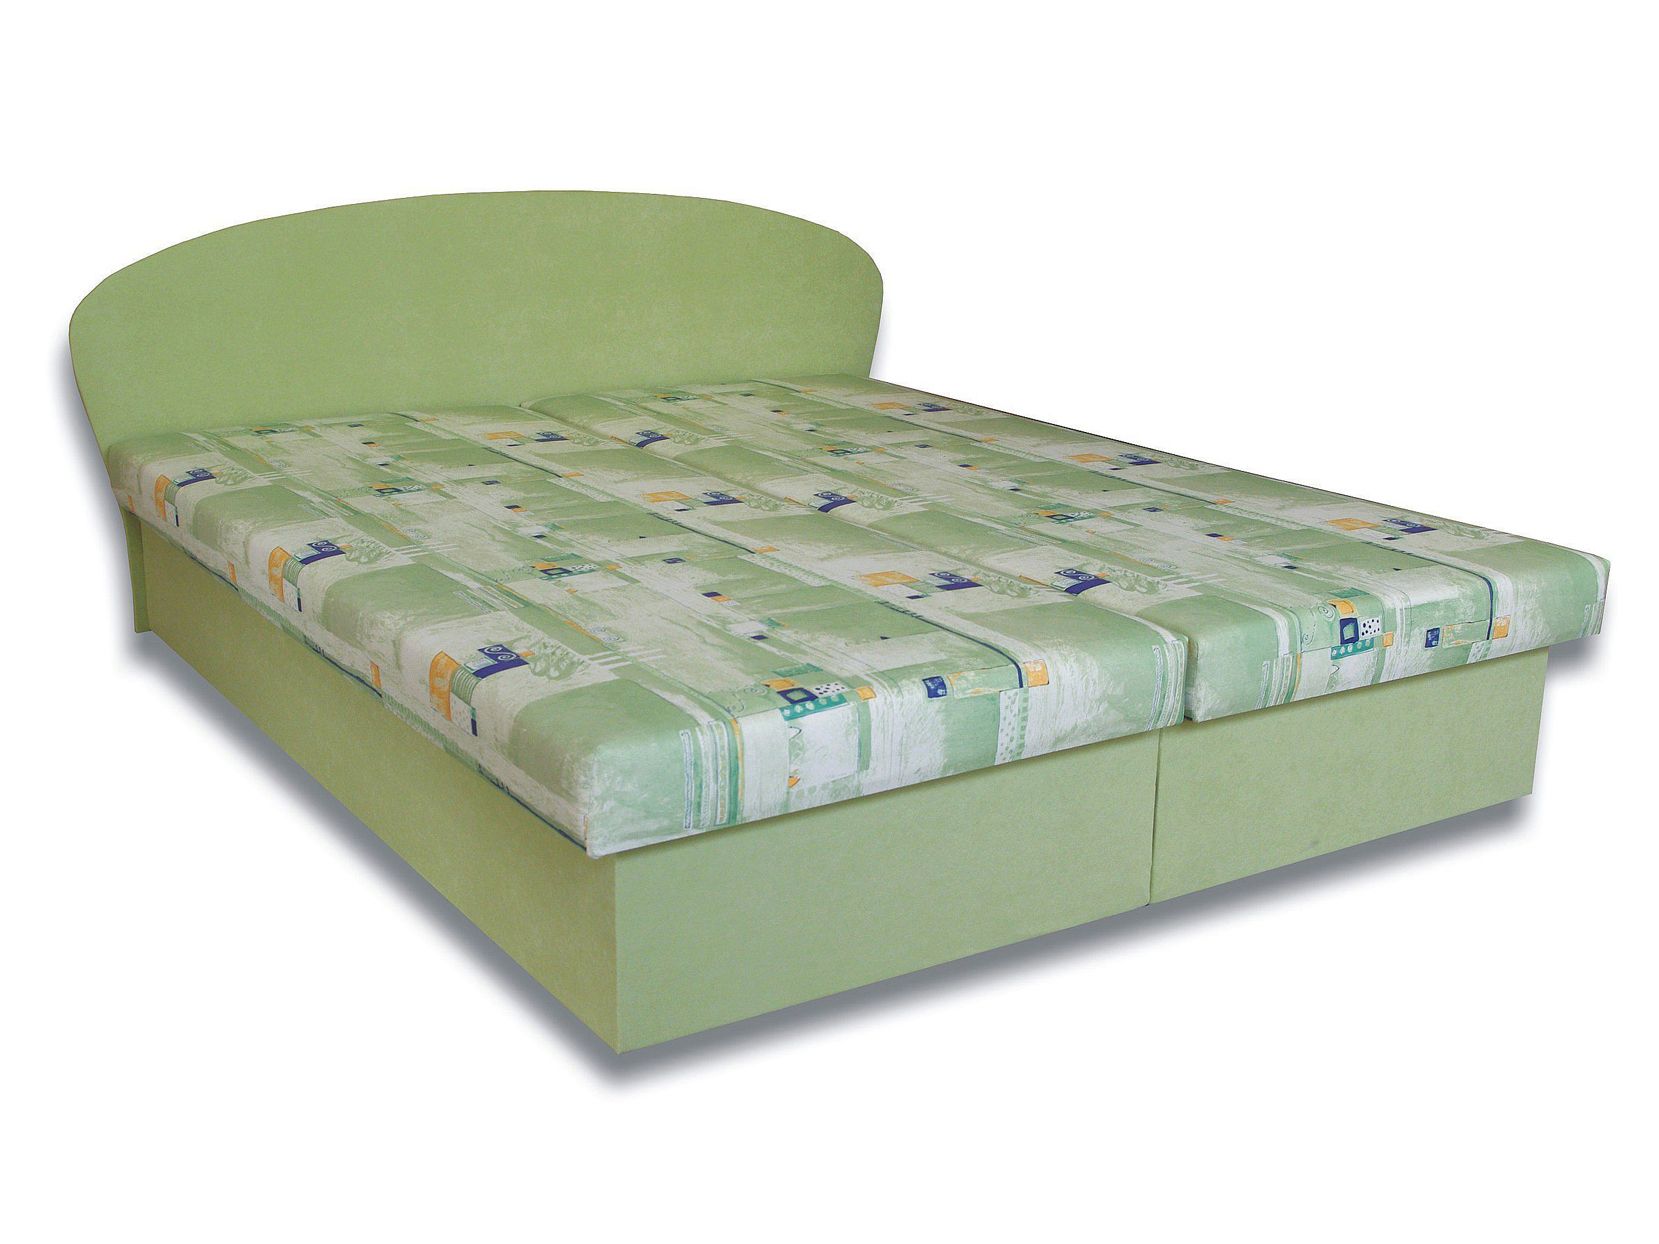 Manželská posteľ 160 cm Milka 2 (s penovými matracmi)